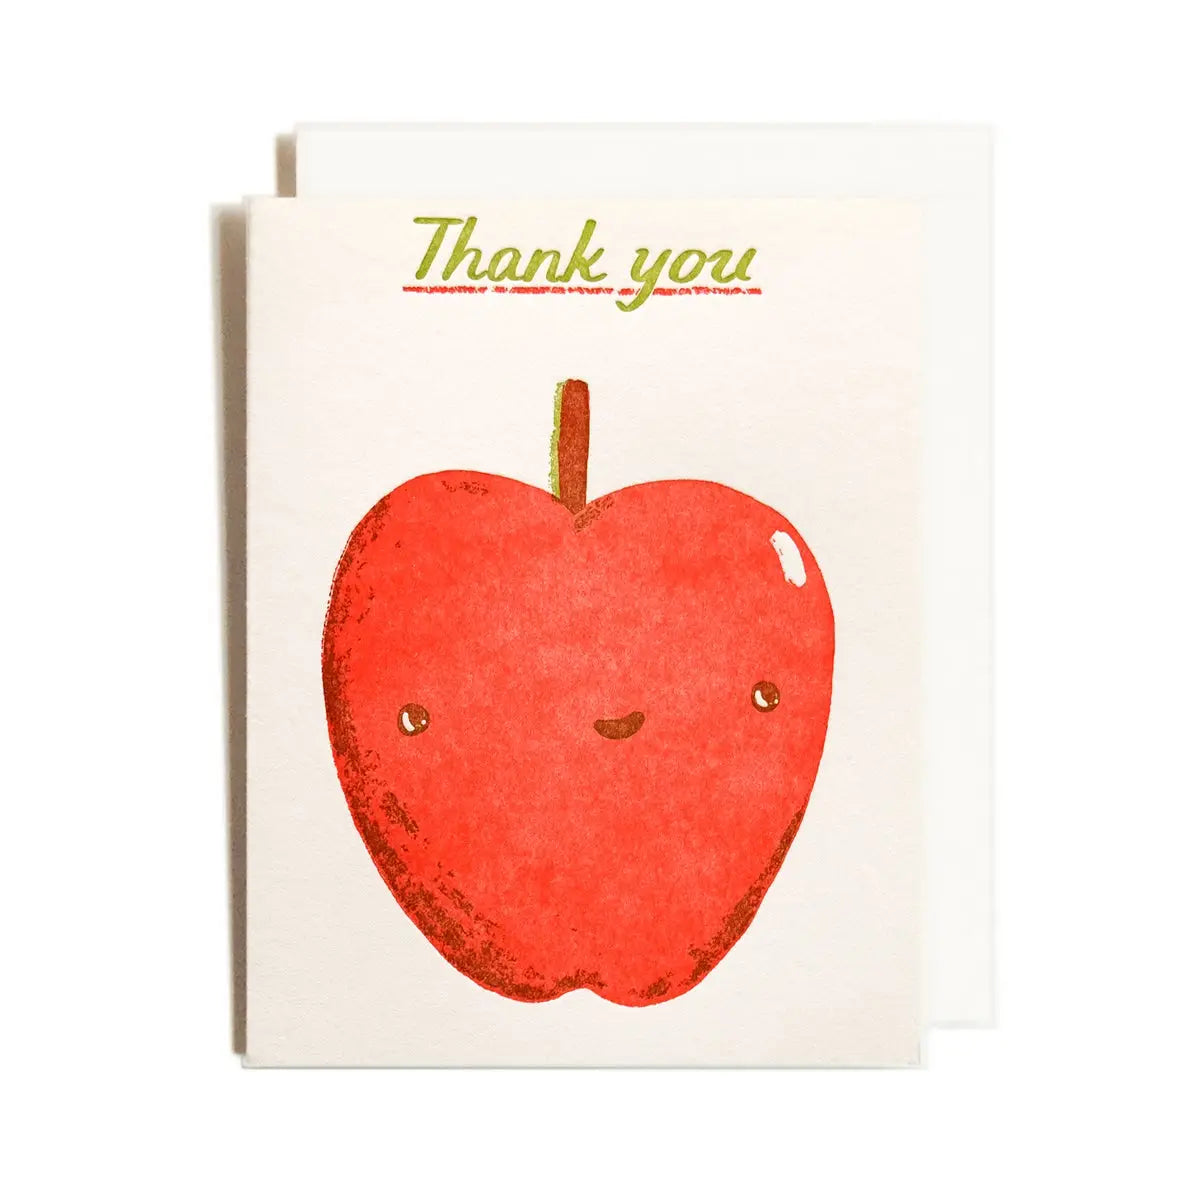 Homework Letterpress Studio Greeting Card - Thank You Apple